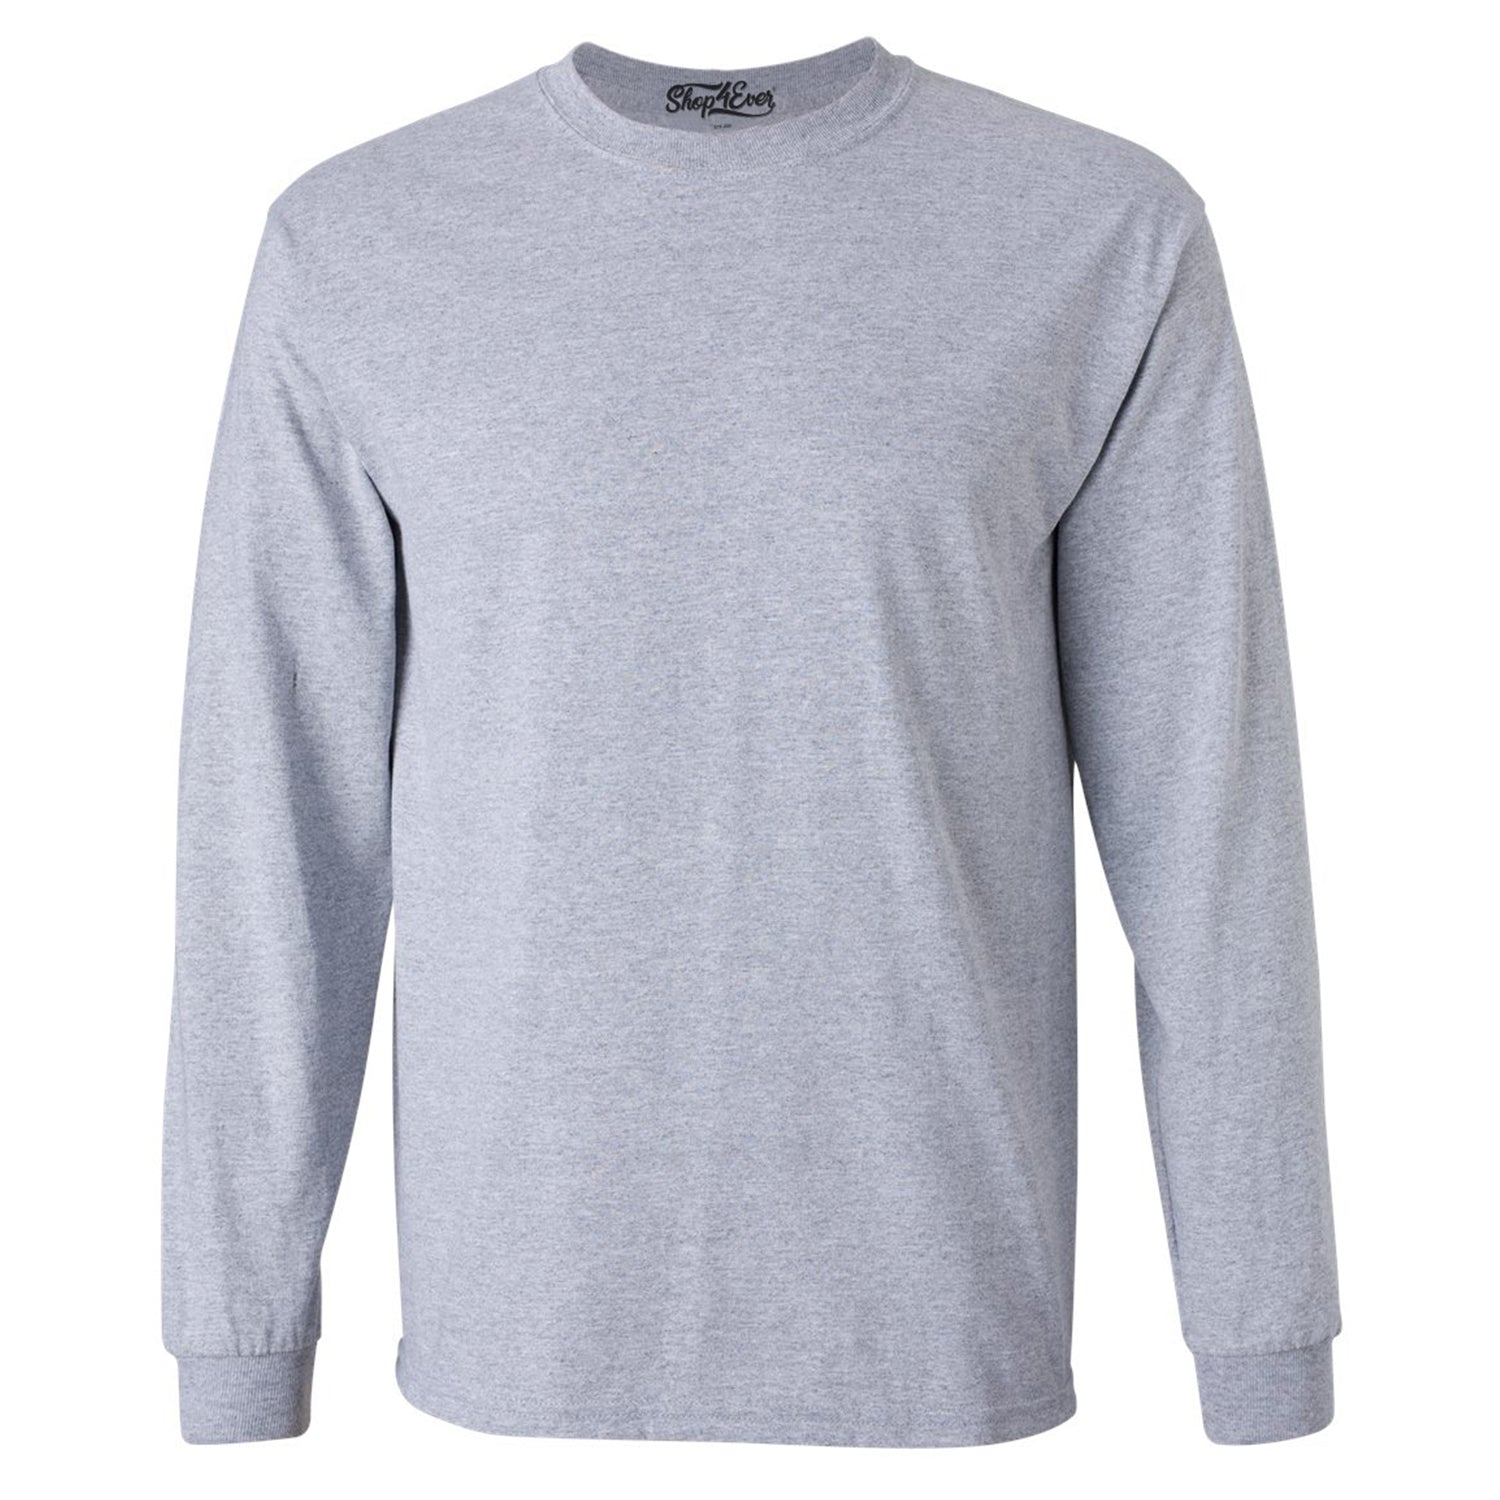 Unisex Cotton Long Sleeve Shirt